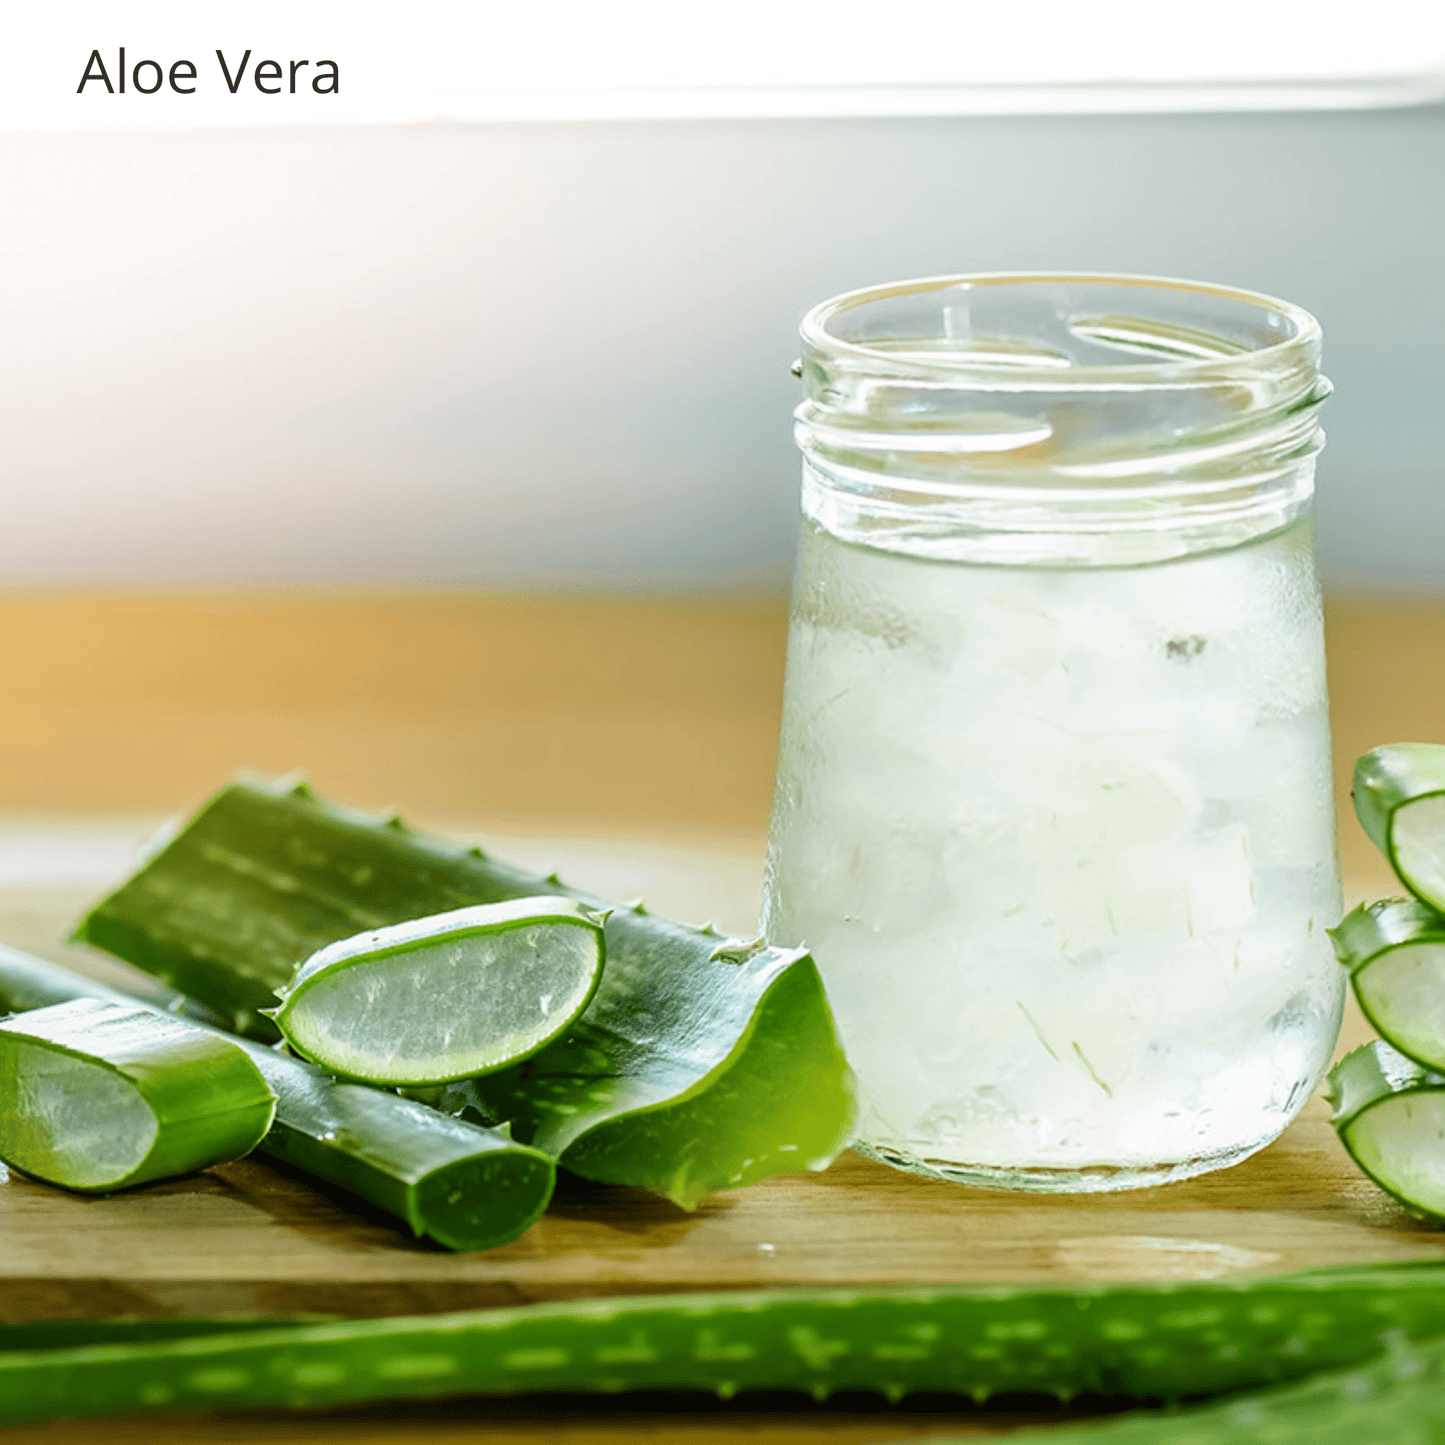 Be Green Bath and Body Green Tea Foaming Facial Cleanser contains aloe vera